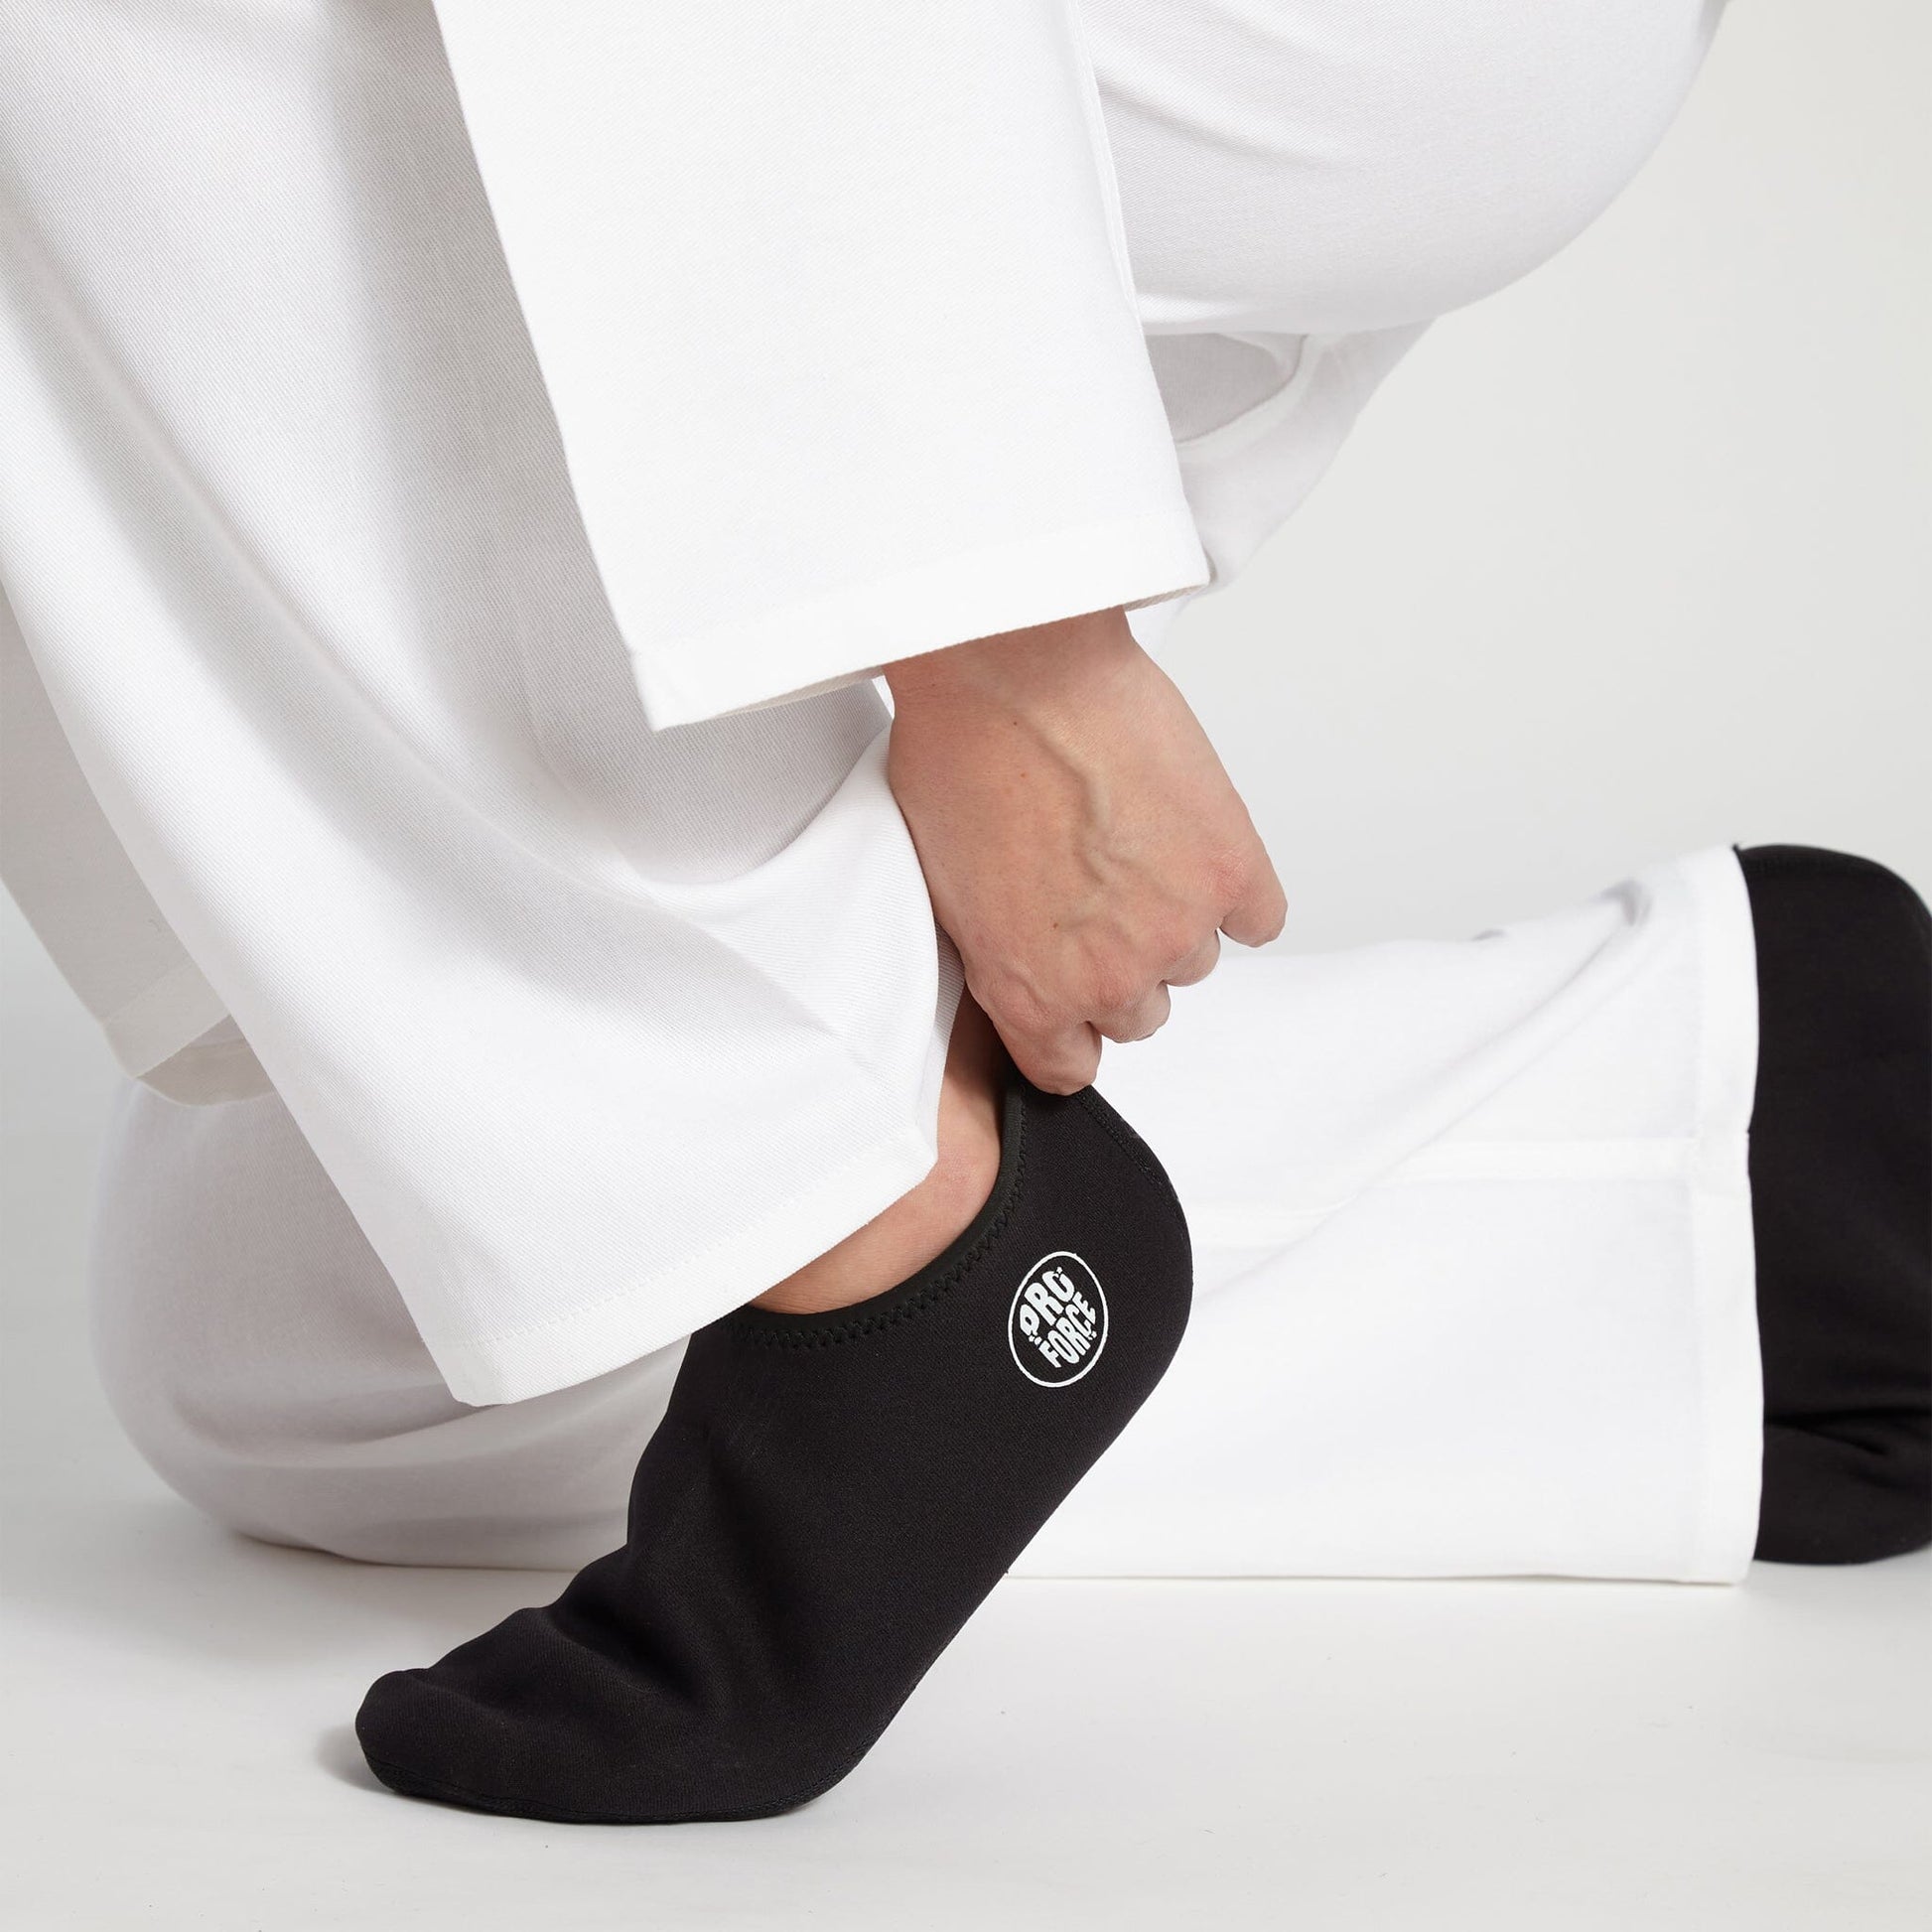 Eclipse Martial Art Supplies Hy-Gens 2 Shoe martial arts karate tkd mat shoes